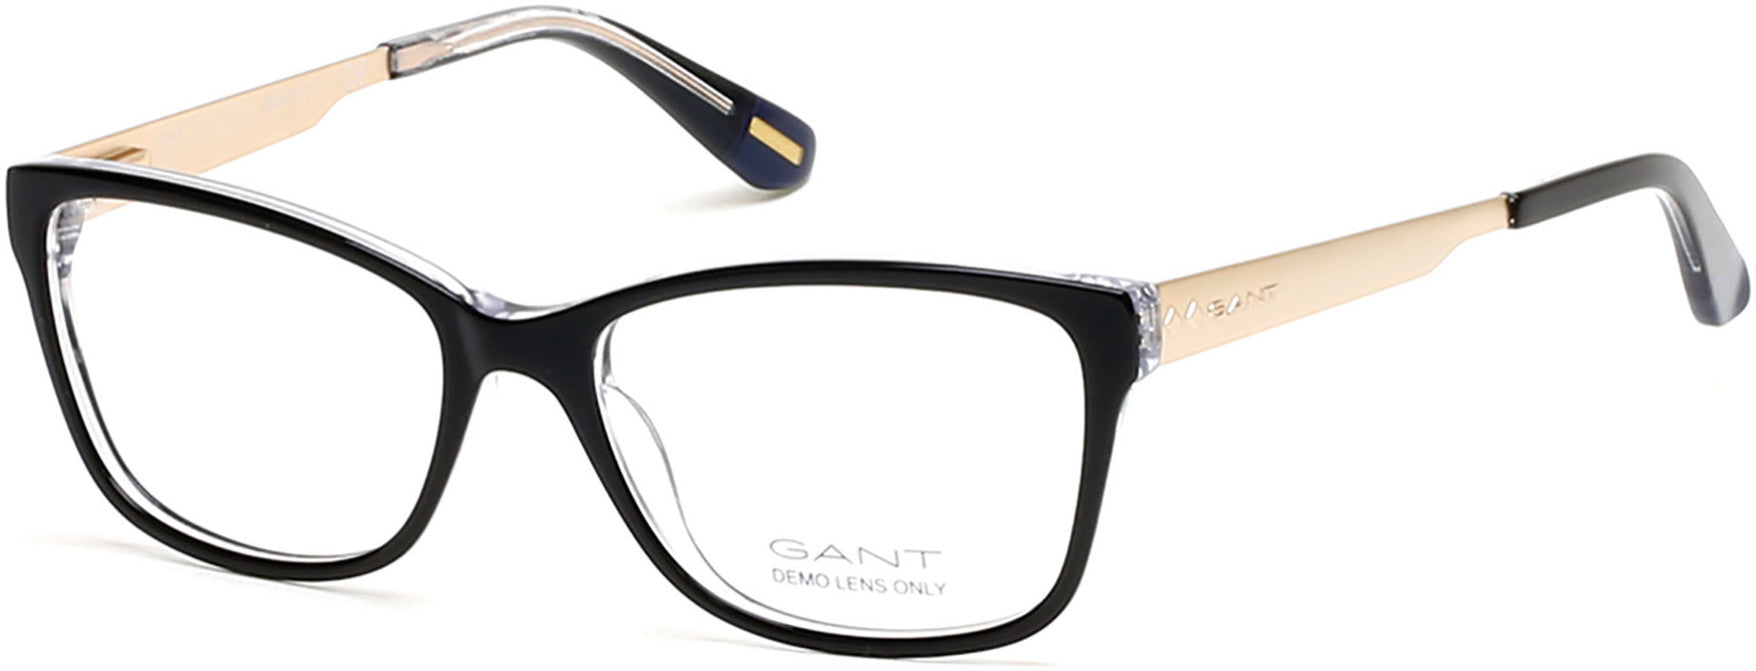 Gant GA4060 Square Eyeglasses 001-001 - Shiny Black